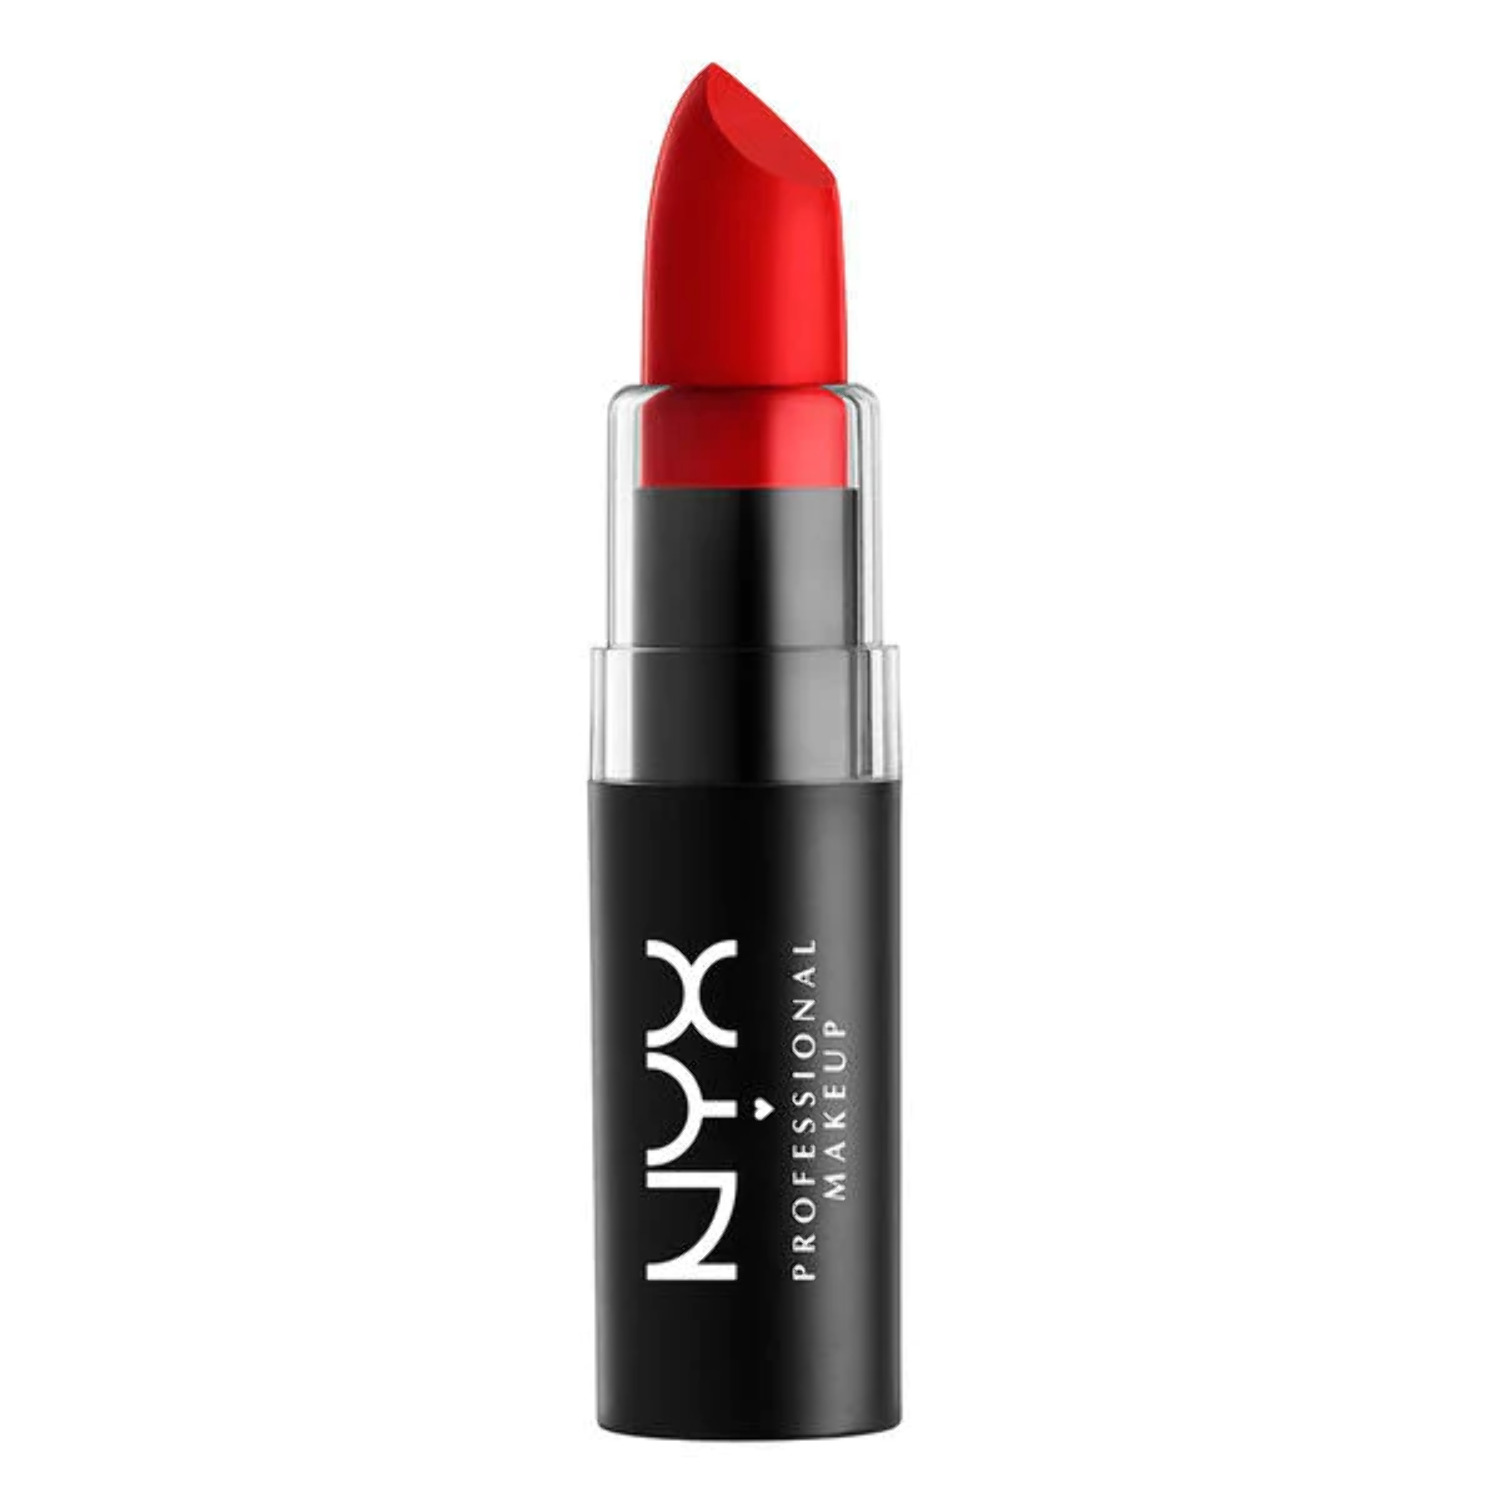 NYX Matte Lipstick - Indie Flick - image 4 of 11